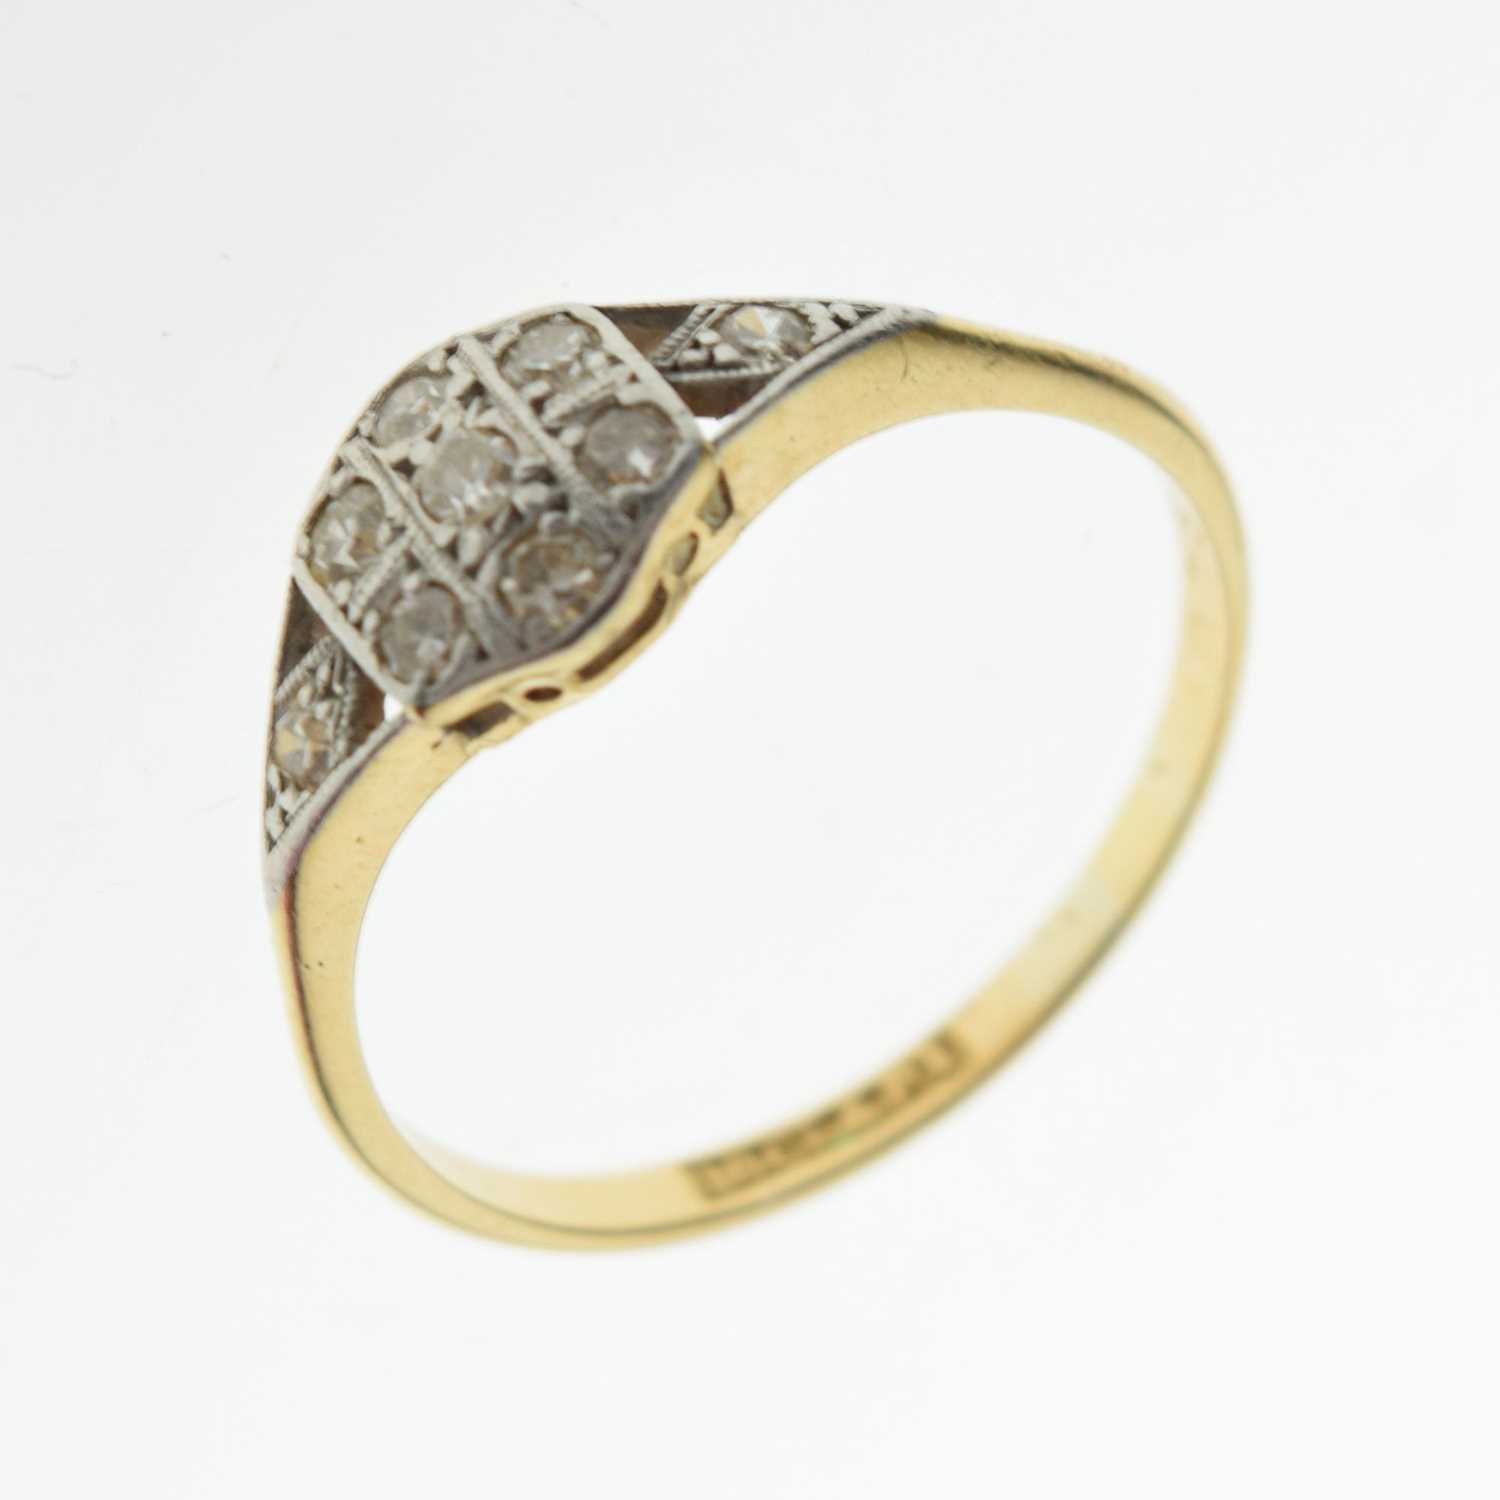 Lot 10 - Art Deco-style diamond dress ring